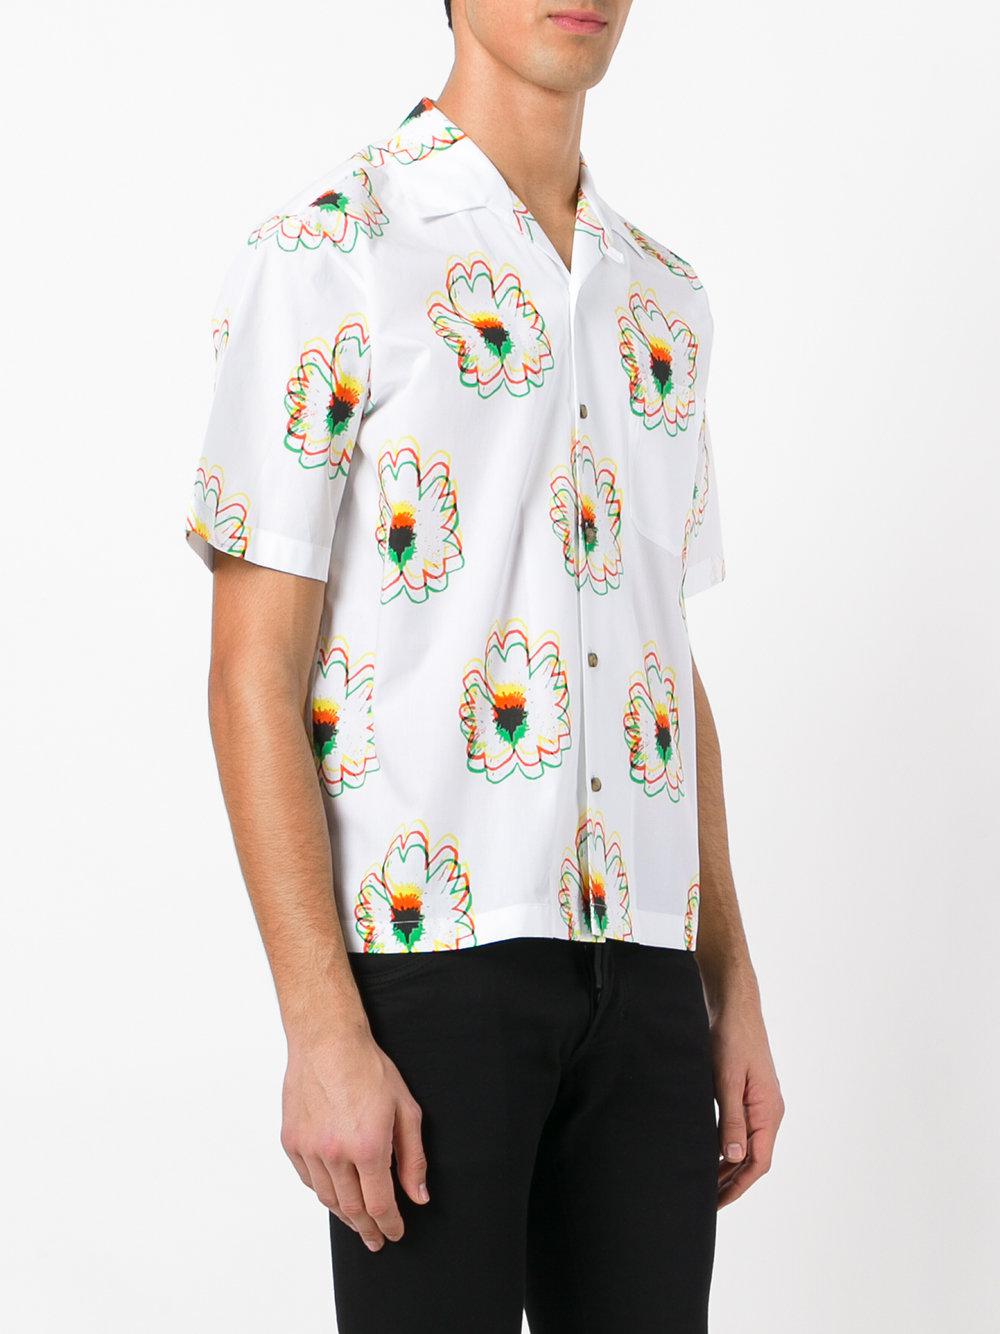 Stella McCartney Cotton Floral Print Bowling Shirt in White for Men - Lyst